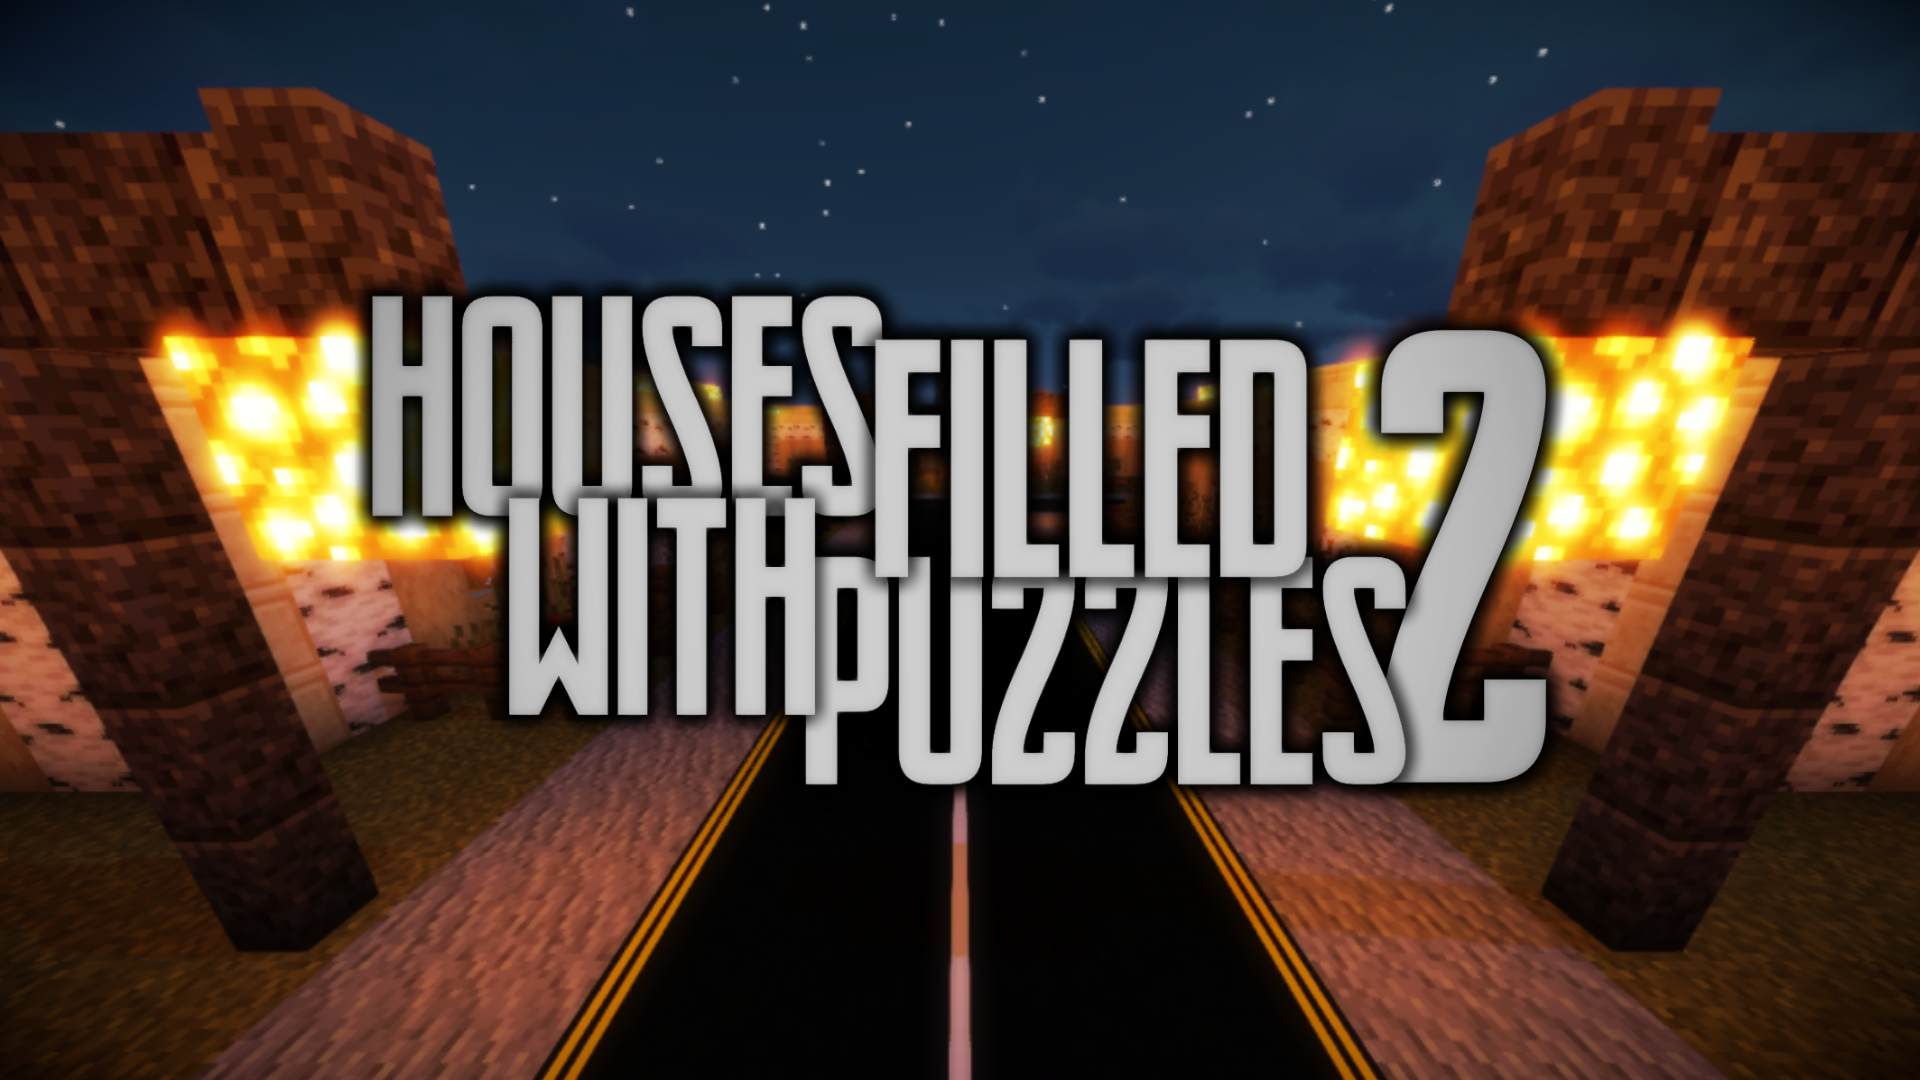 Descarca Houses Filled With Puzzles 2 pentru Minecraft 1.16.4